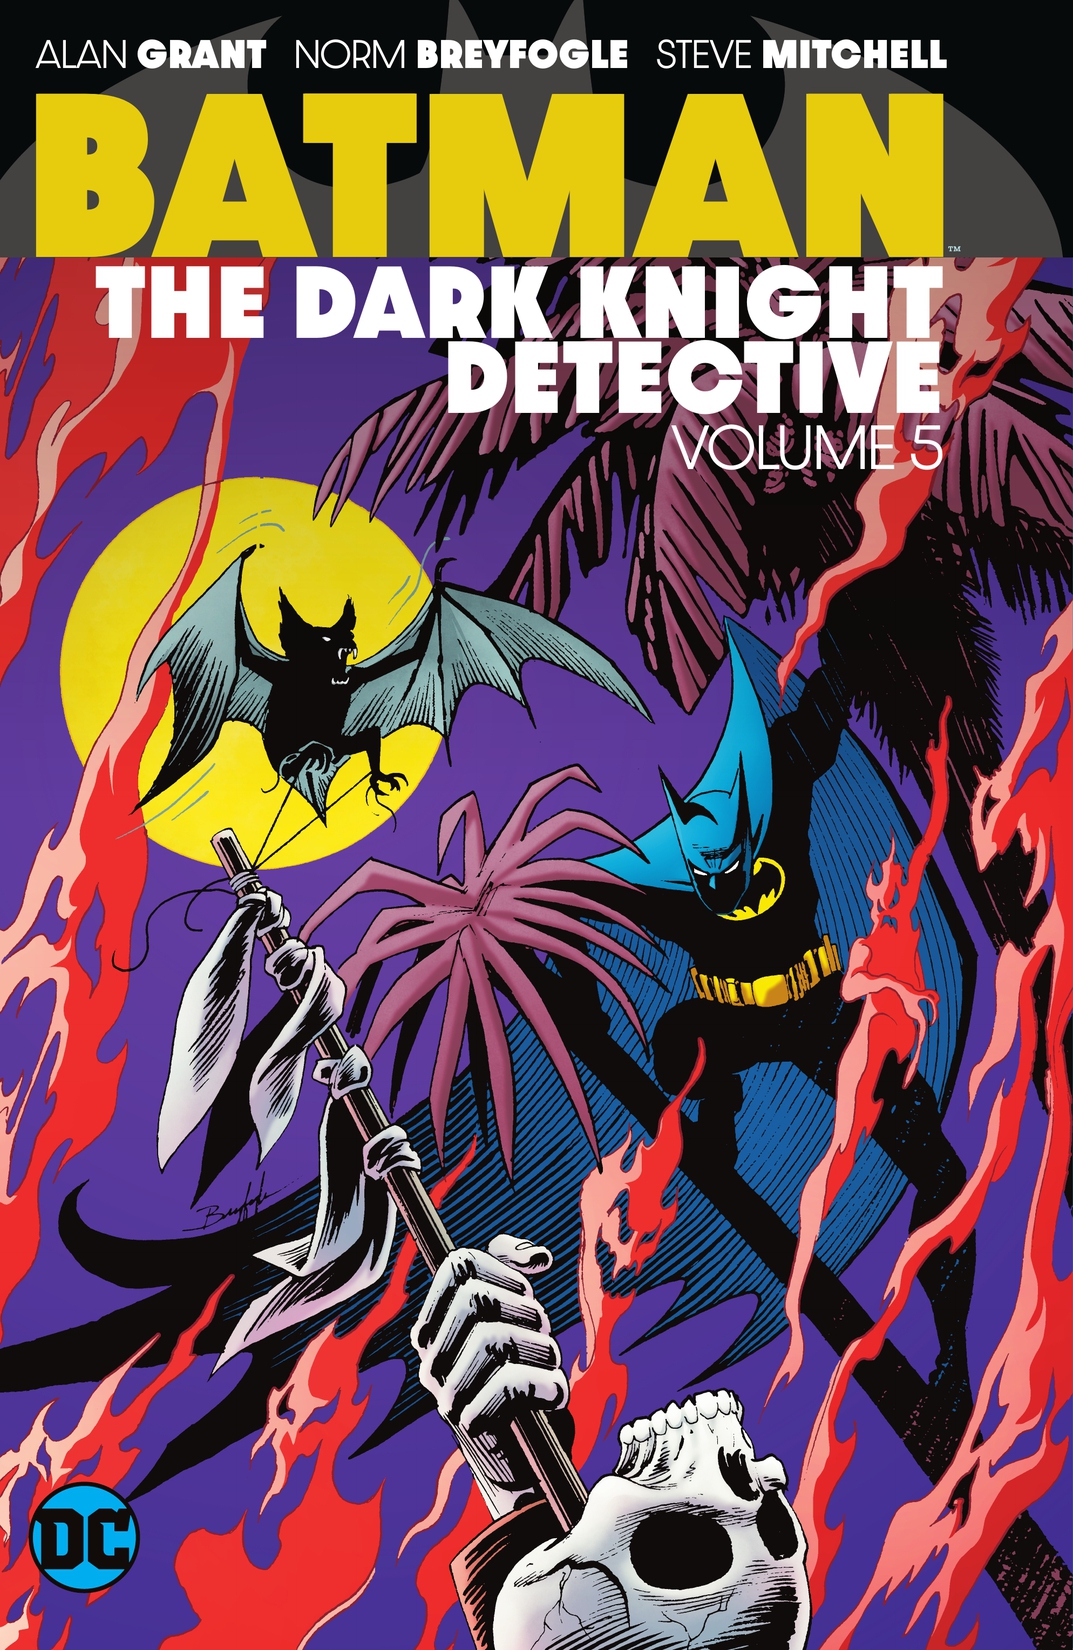 Batman: The Dark Knight Detective Vol. 5 preview images